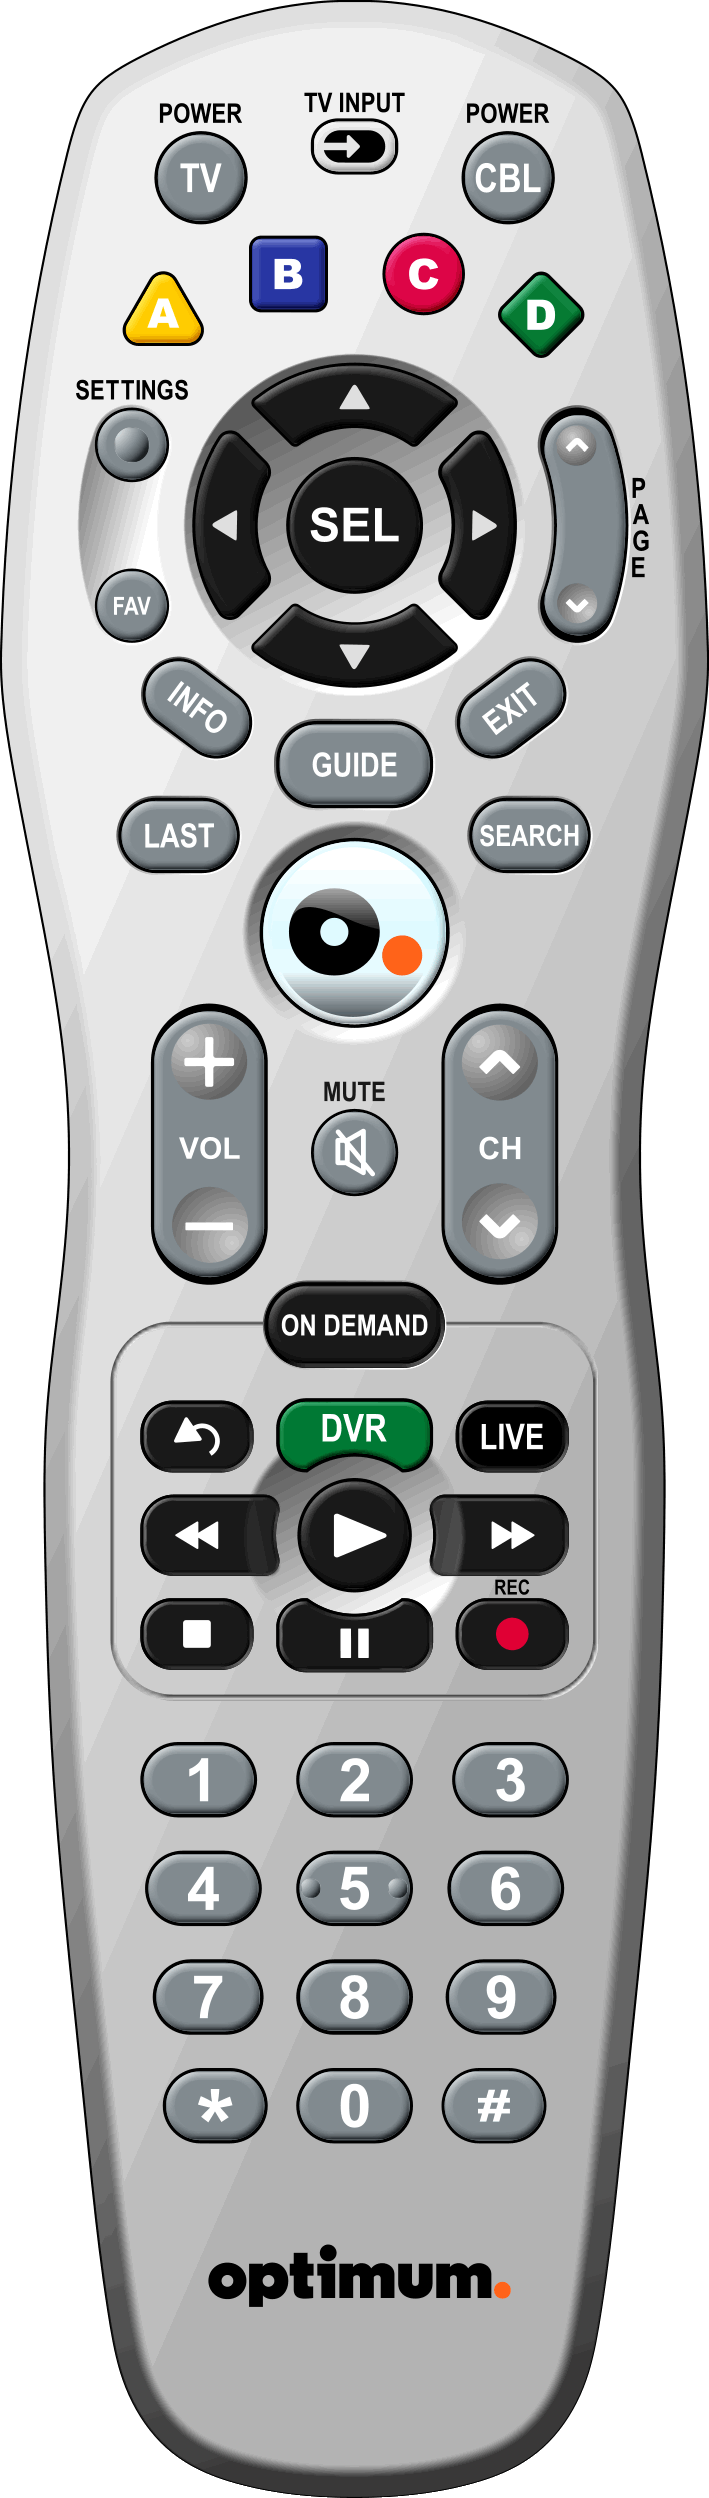 Program Cablevision Remote Tv Volume